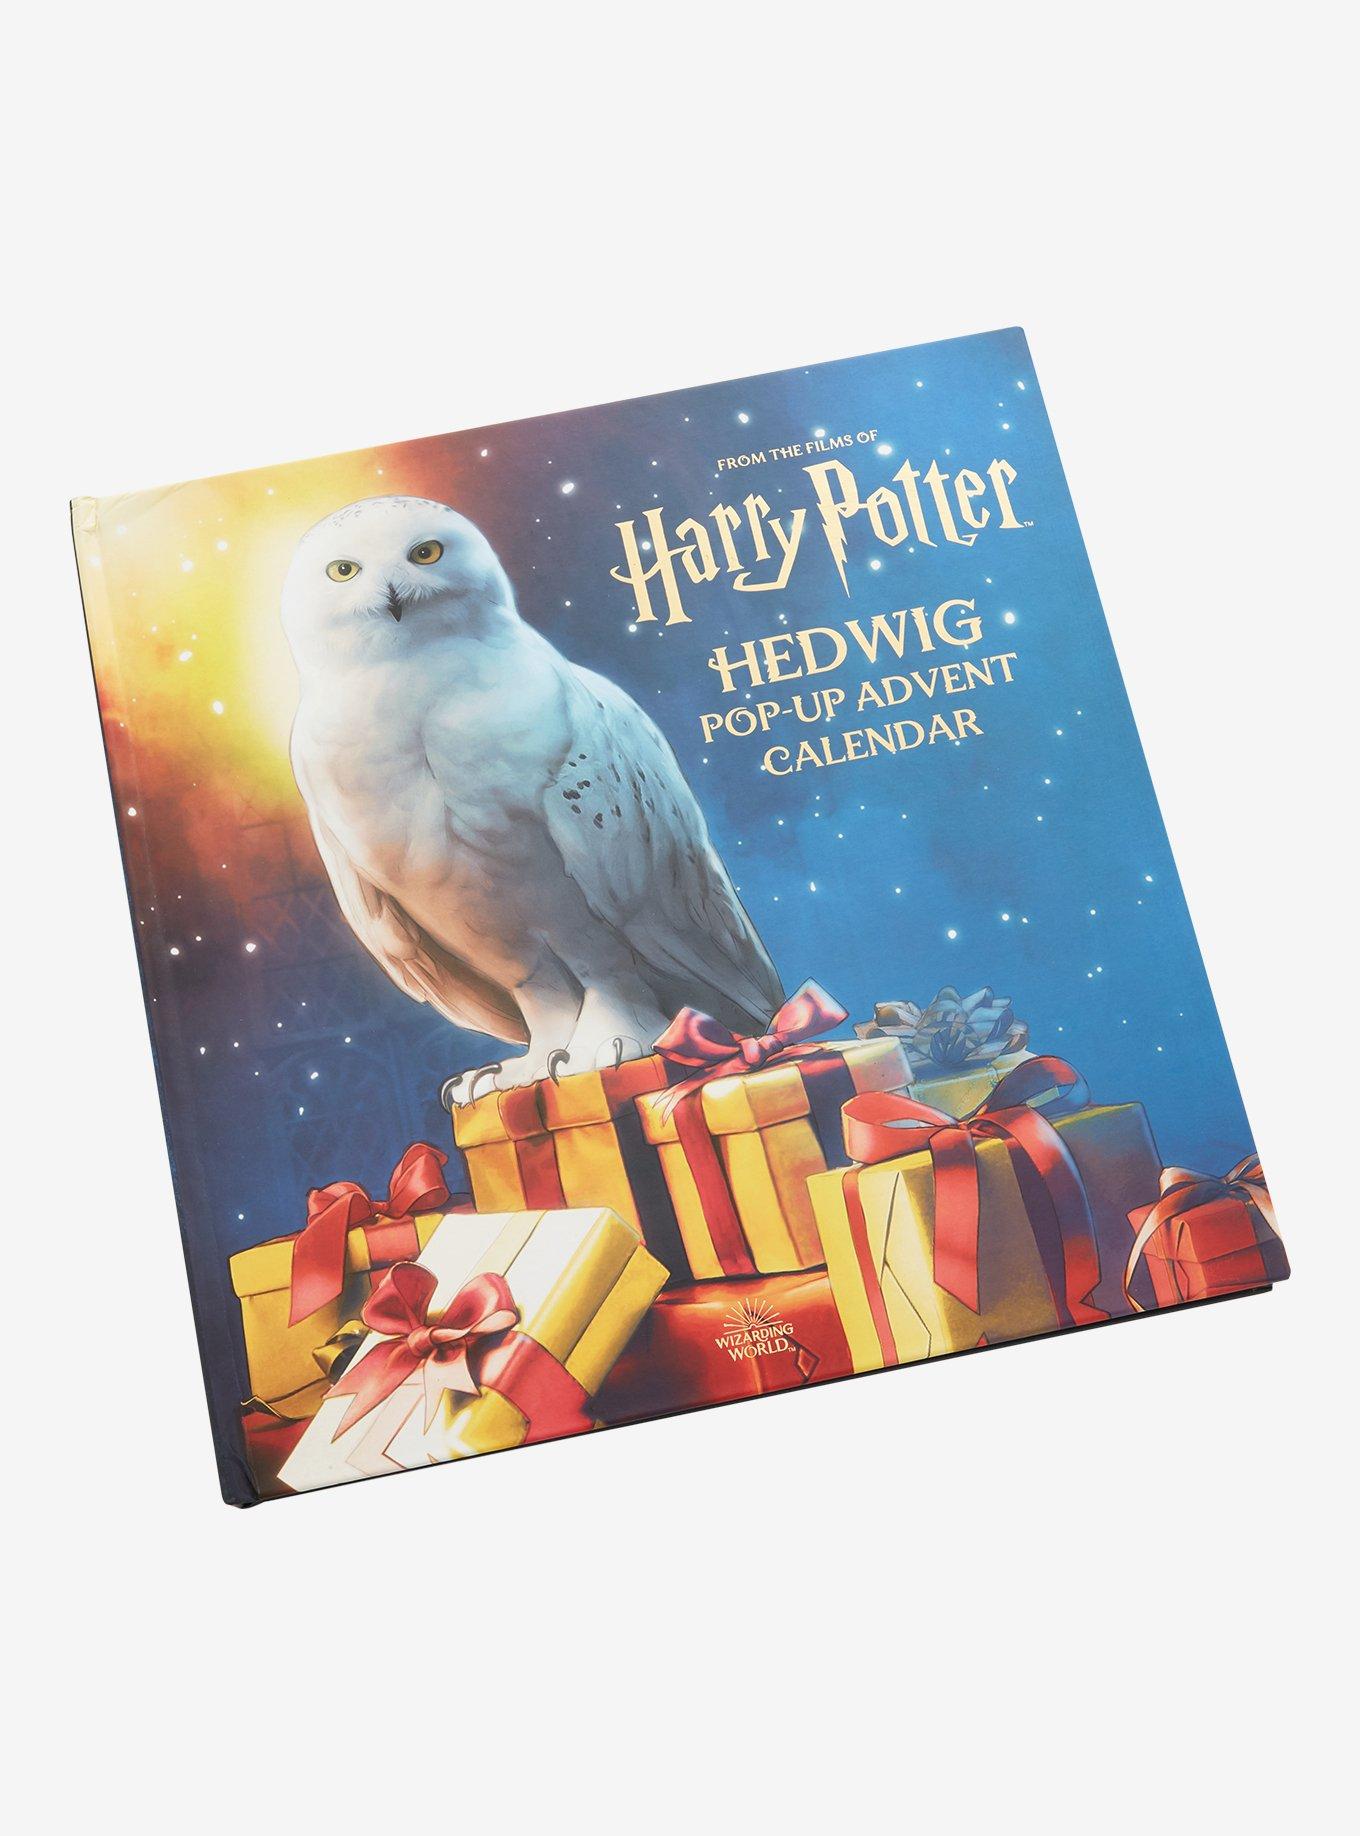 Hot Topic Harry Potter Hedwig Pop Up Advent Calendar Green Tree Mall